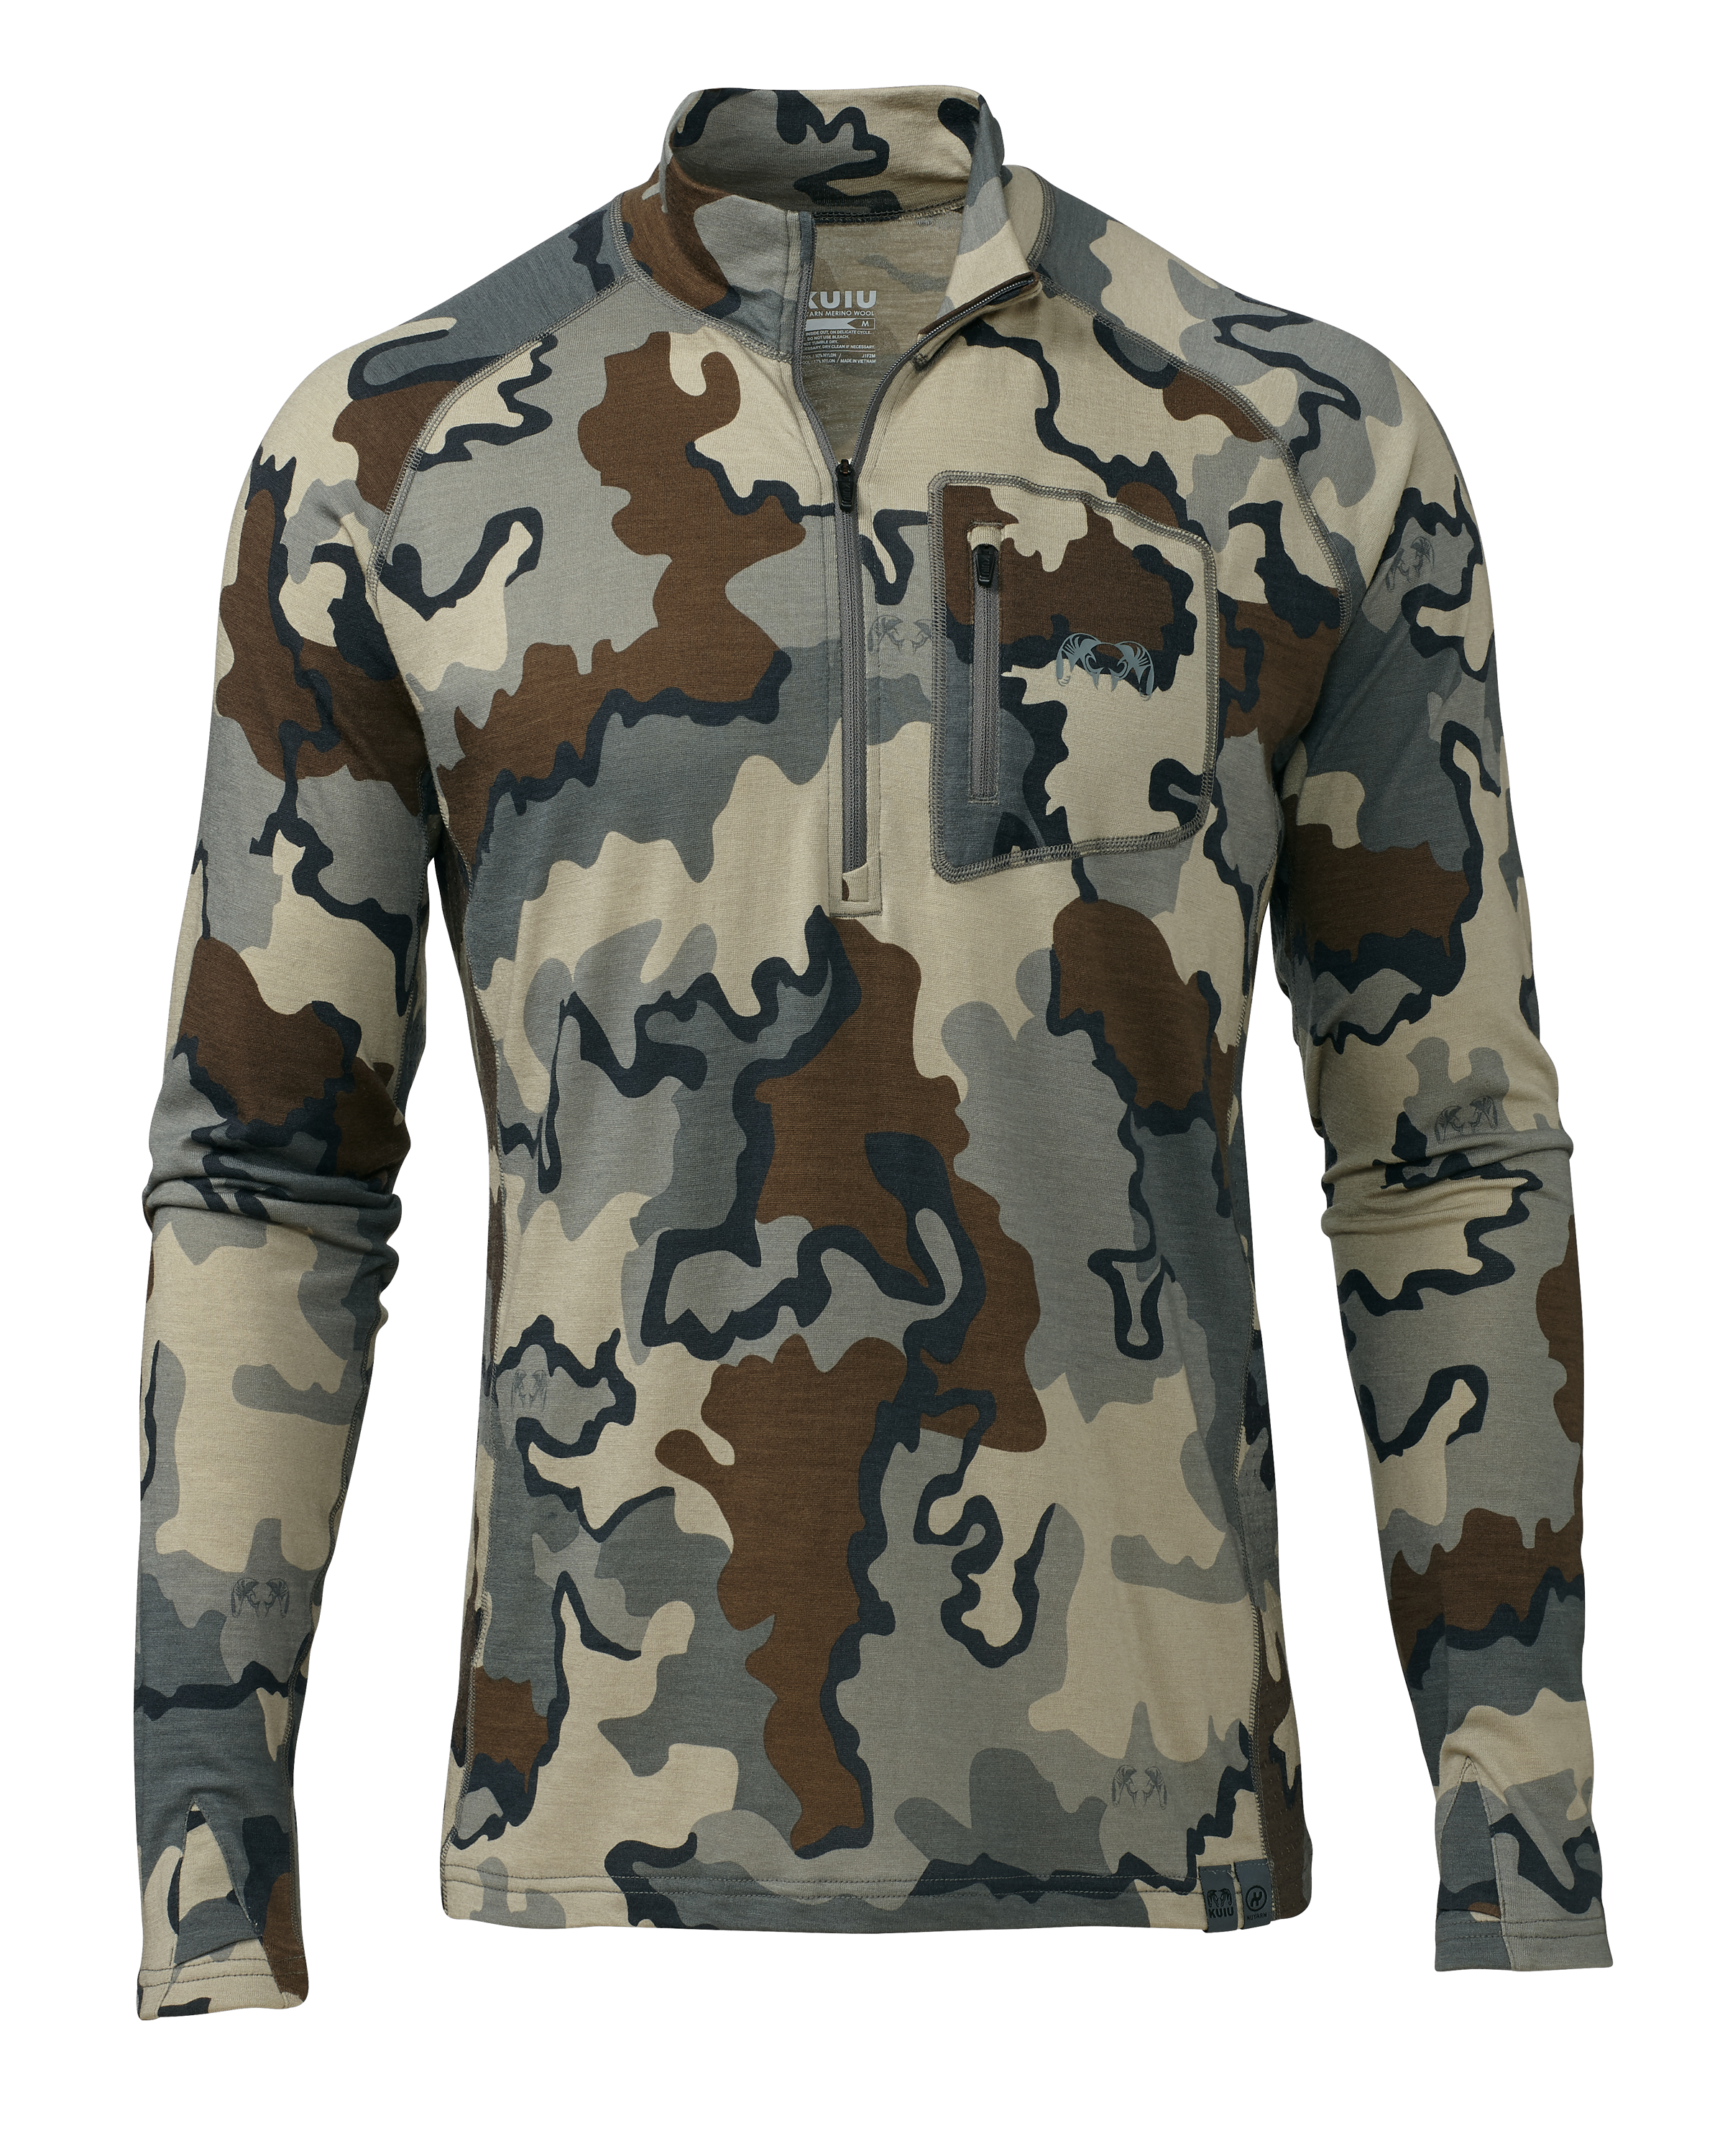 KUIU ULTRA  145 Zip-T Hunting Shirt in Vias | Small